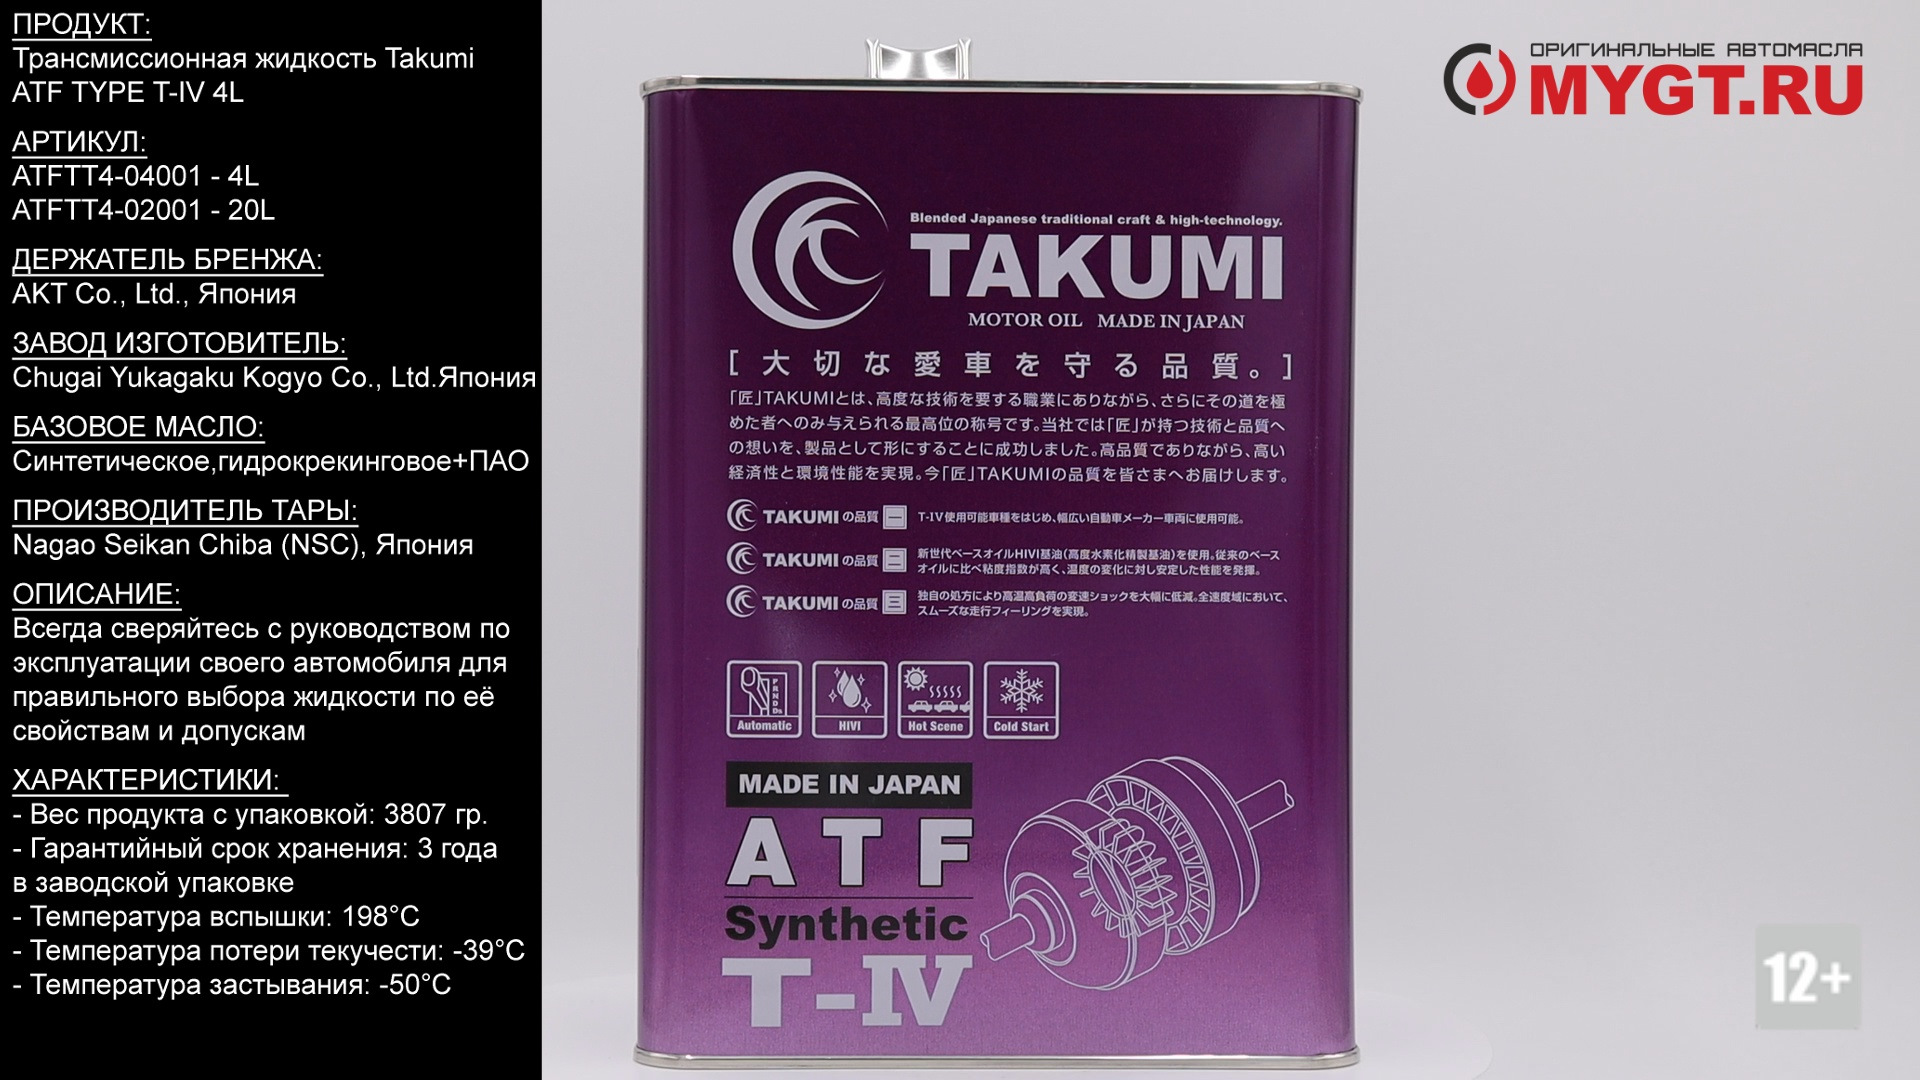 ATF Type t4 артикул. Toyota ATF Fluid t-IV (4.0). Жидкость в АКПП ATF Type t4. NGN ATF sp4. Трансмиссионное масло atf t iv